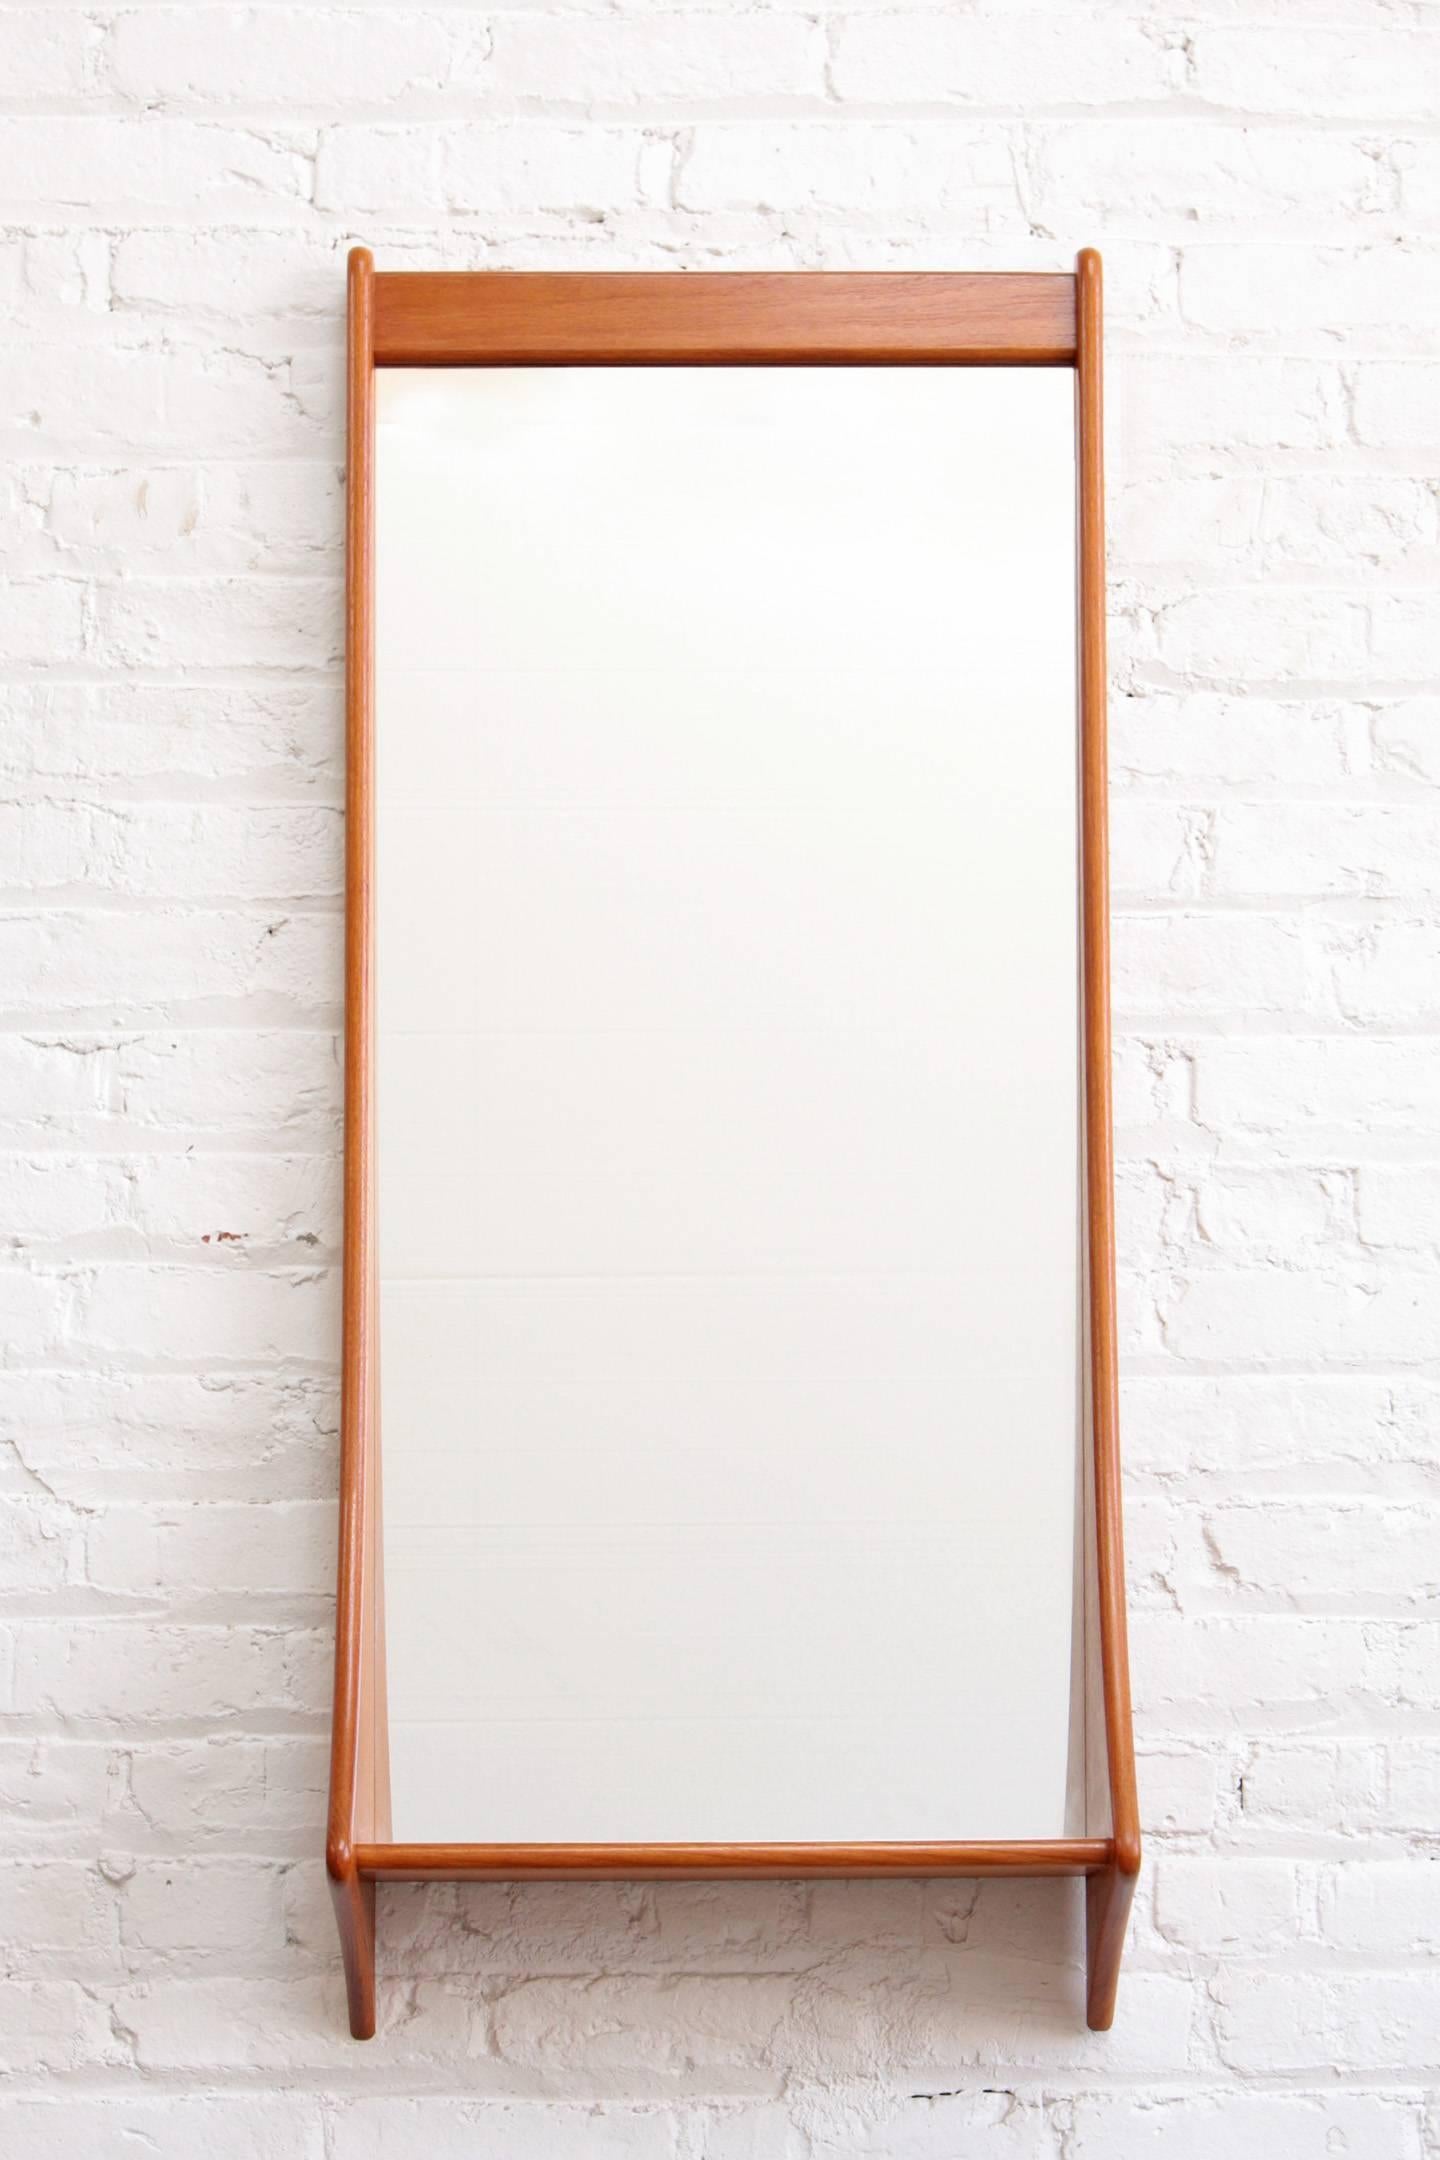 Danish modern wall hung mirror with shelf. Made by Pedersen and Hansen, Denmark.